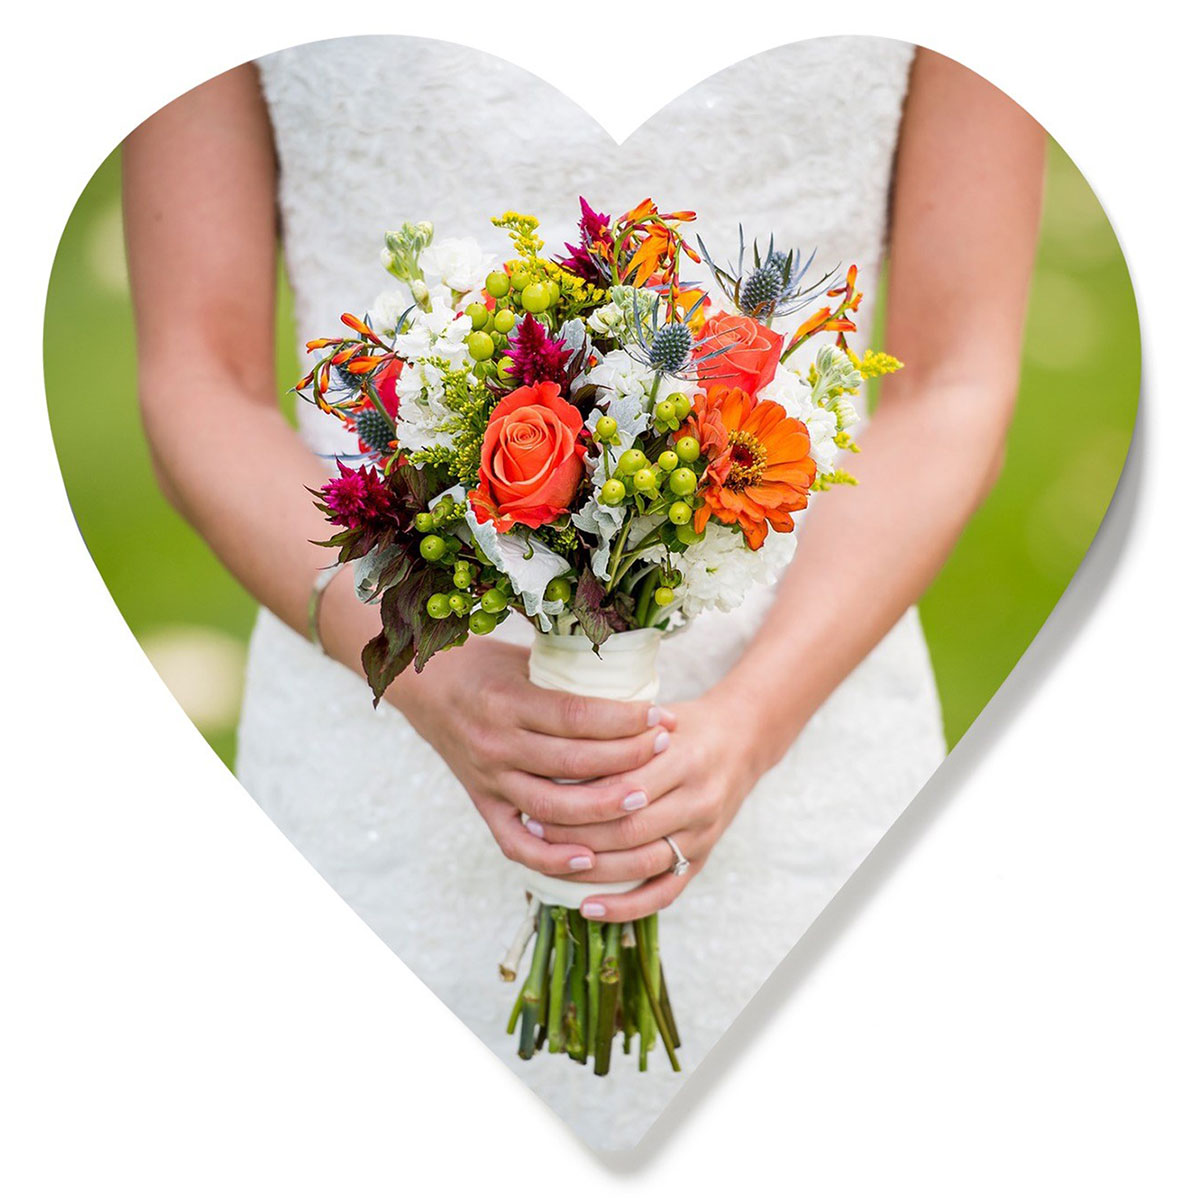 ArtisanHD Custom Cut Out Shapes Heart Photo Wedding Bouquet